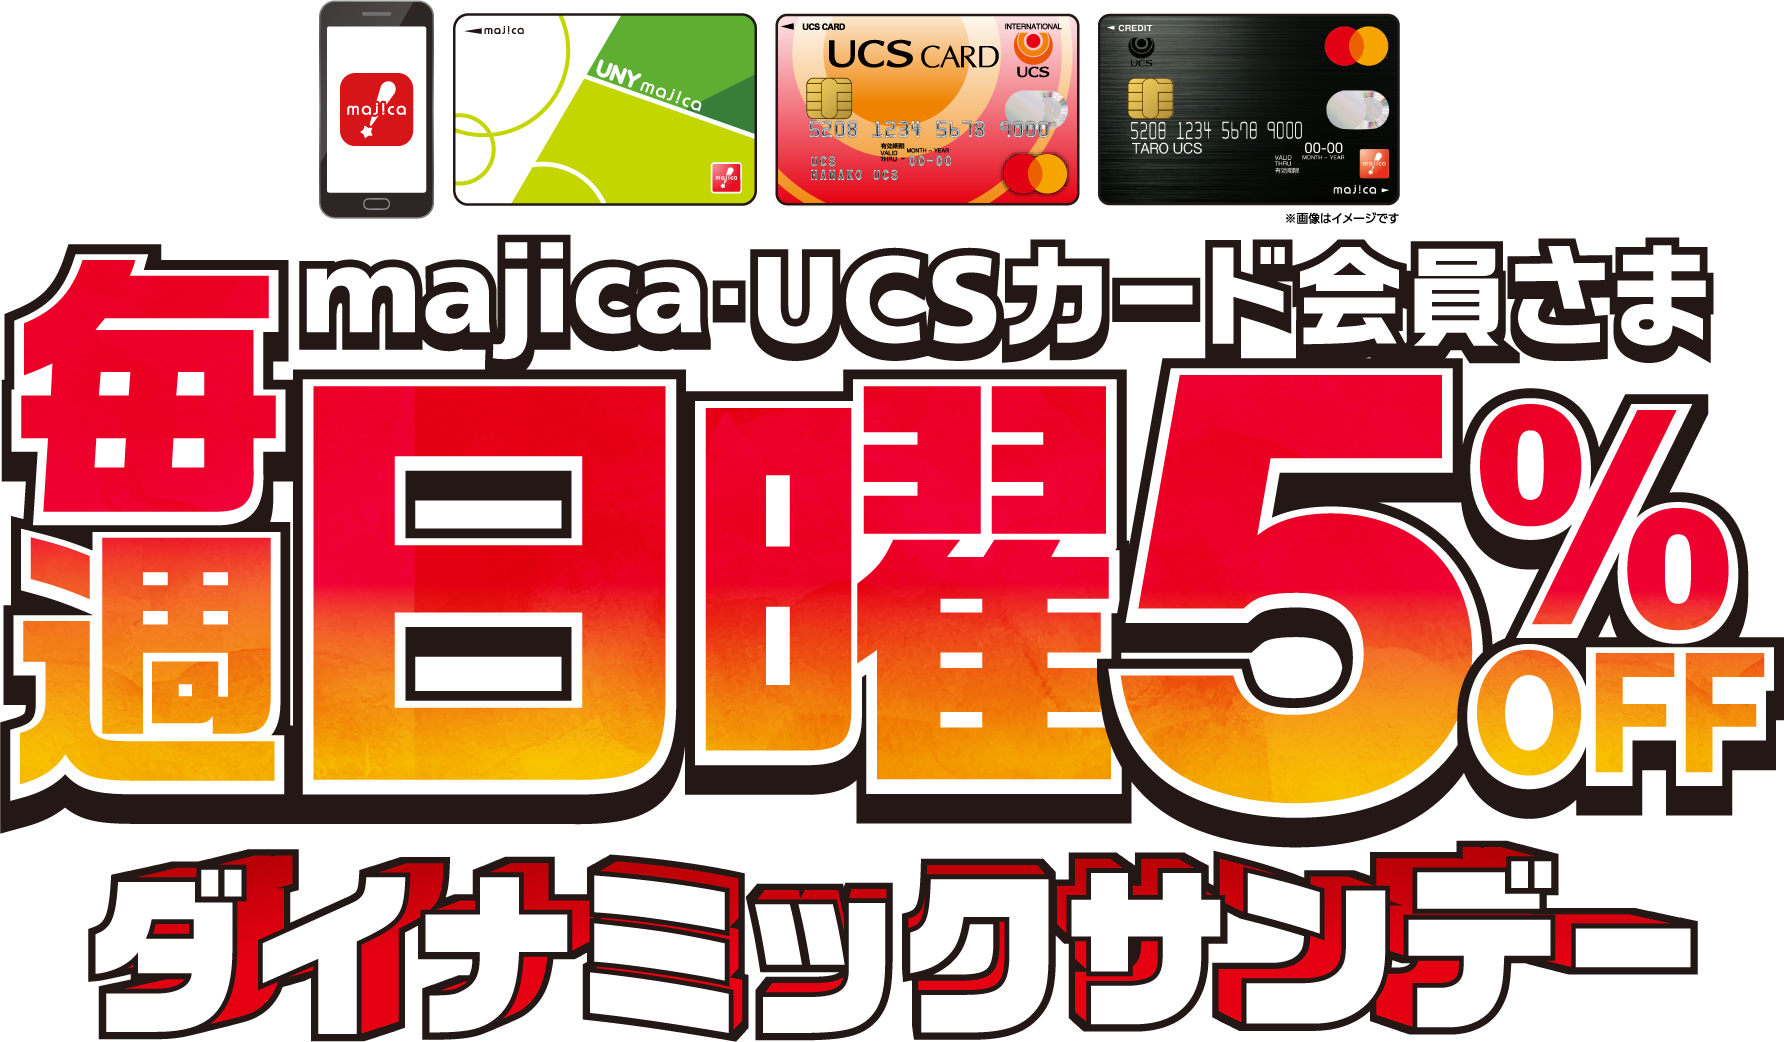 UCSカード･majica会員さま5%OFF ※UCSカード･majicaで全額お支払いください